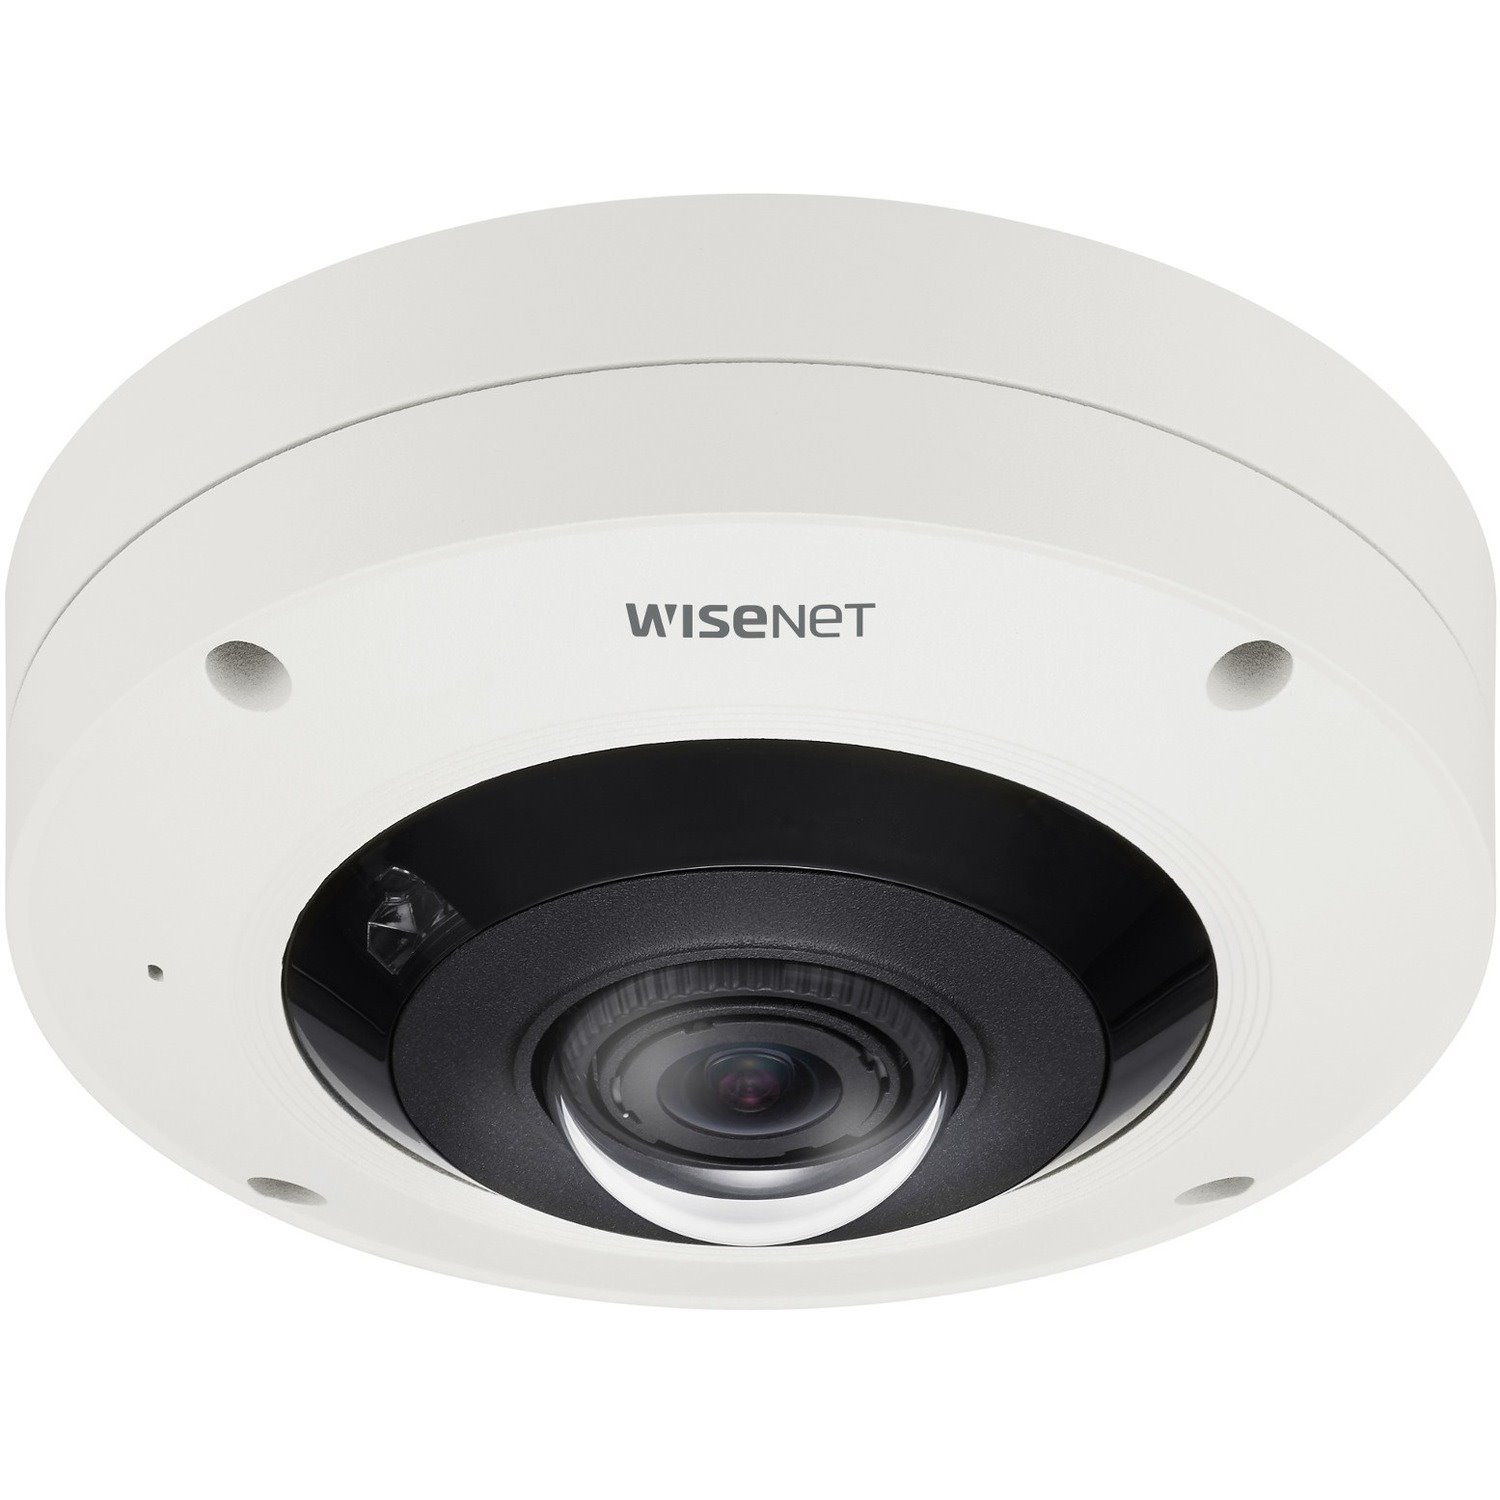 Wisenet XNF-9010RV 12 Megapixel Outdoor Network Camera - Fisheye